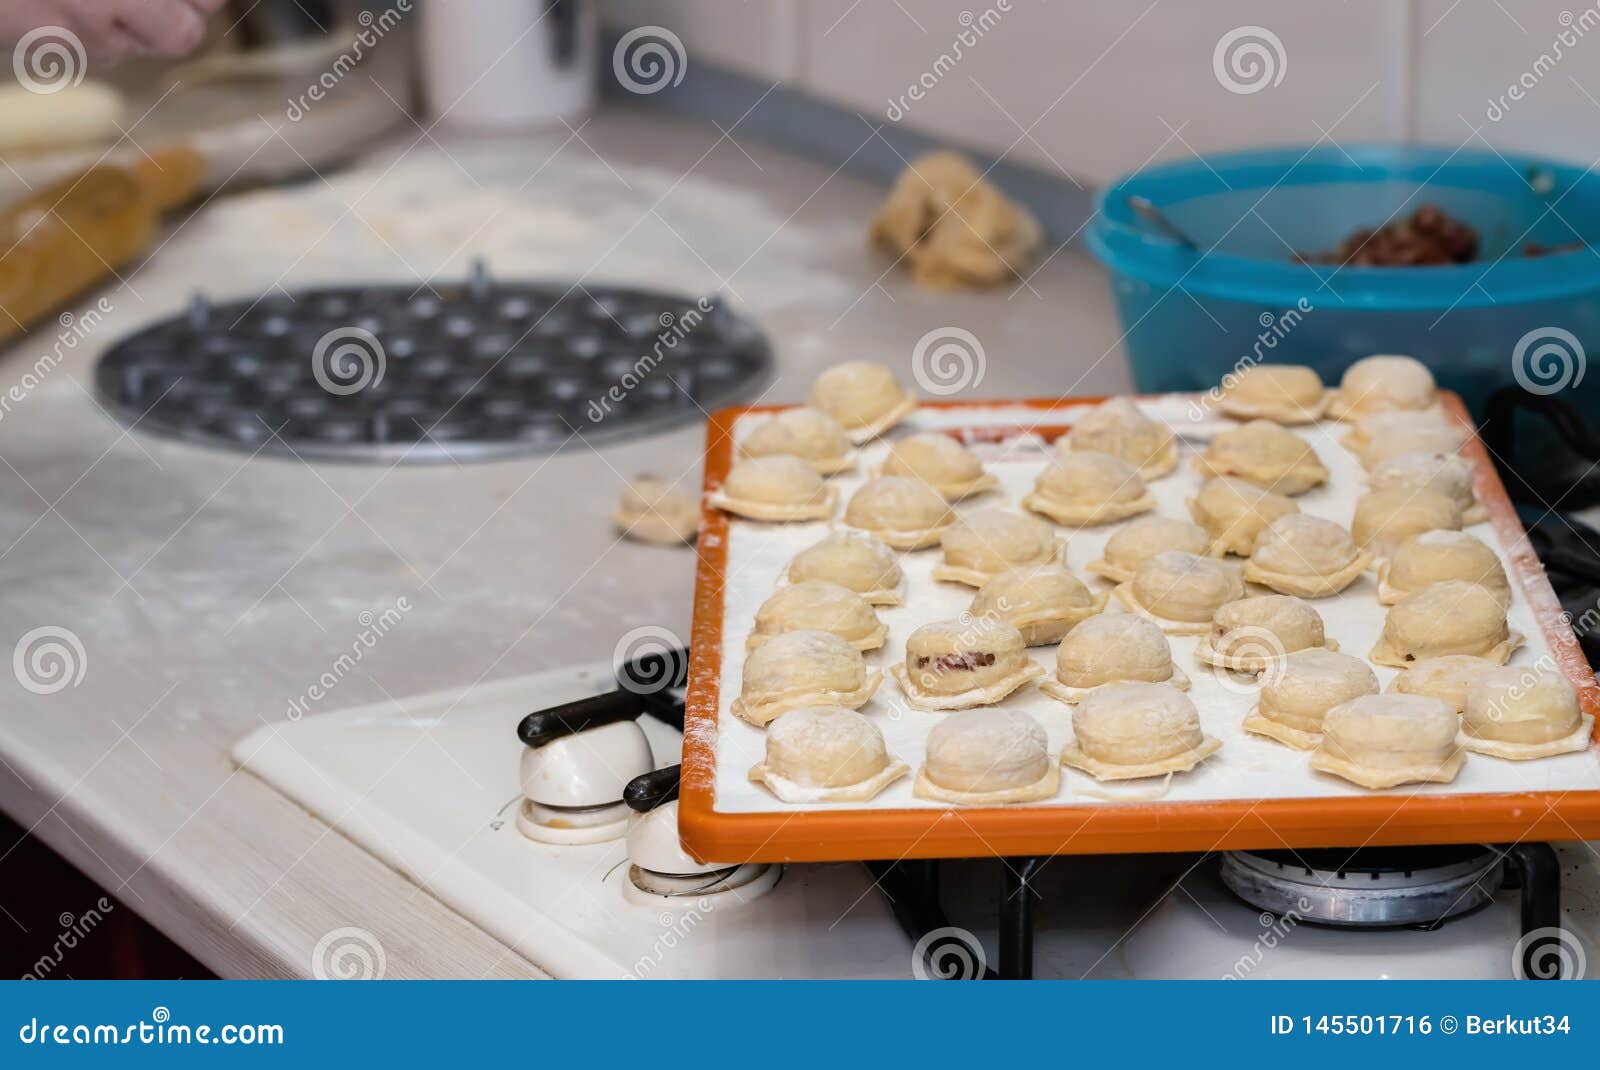 Cooking dumplings at home stock photo. Image of pelmeni - 145501716